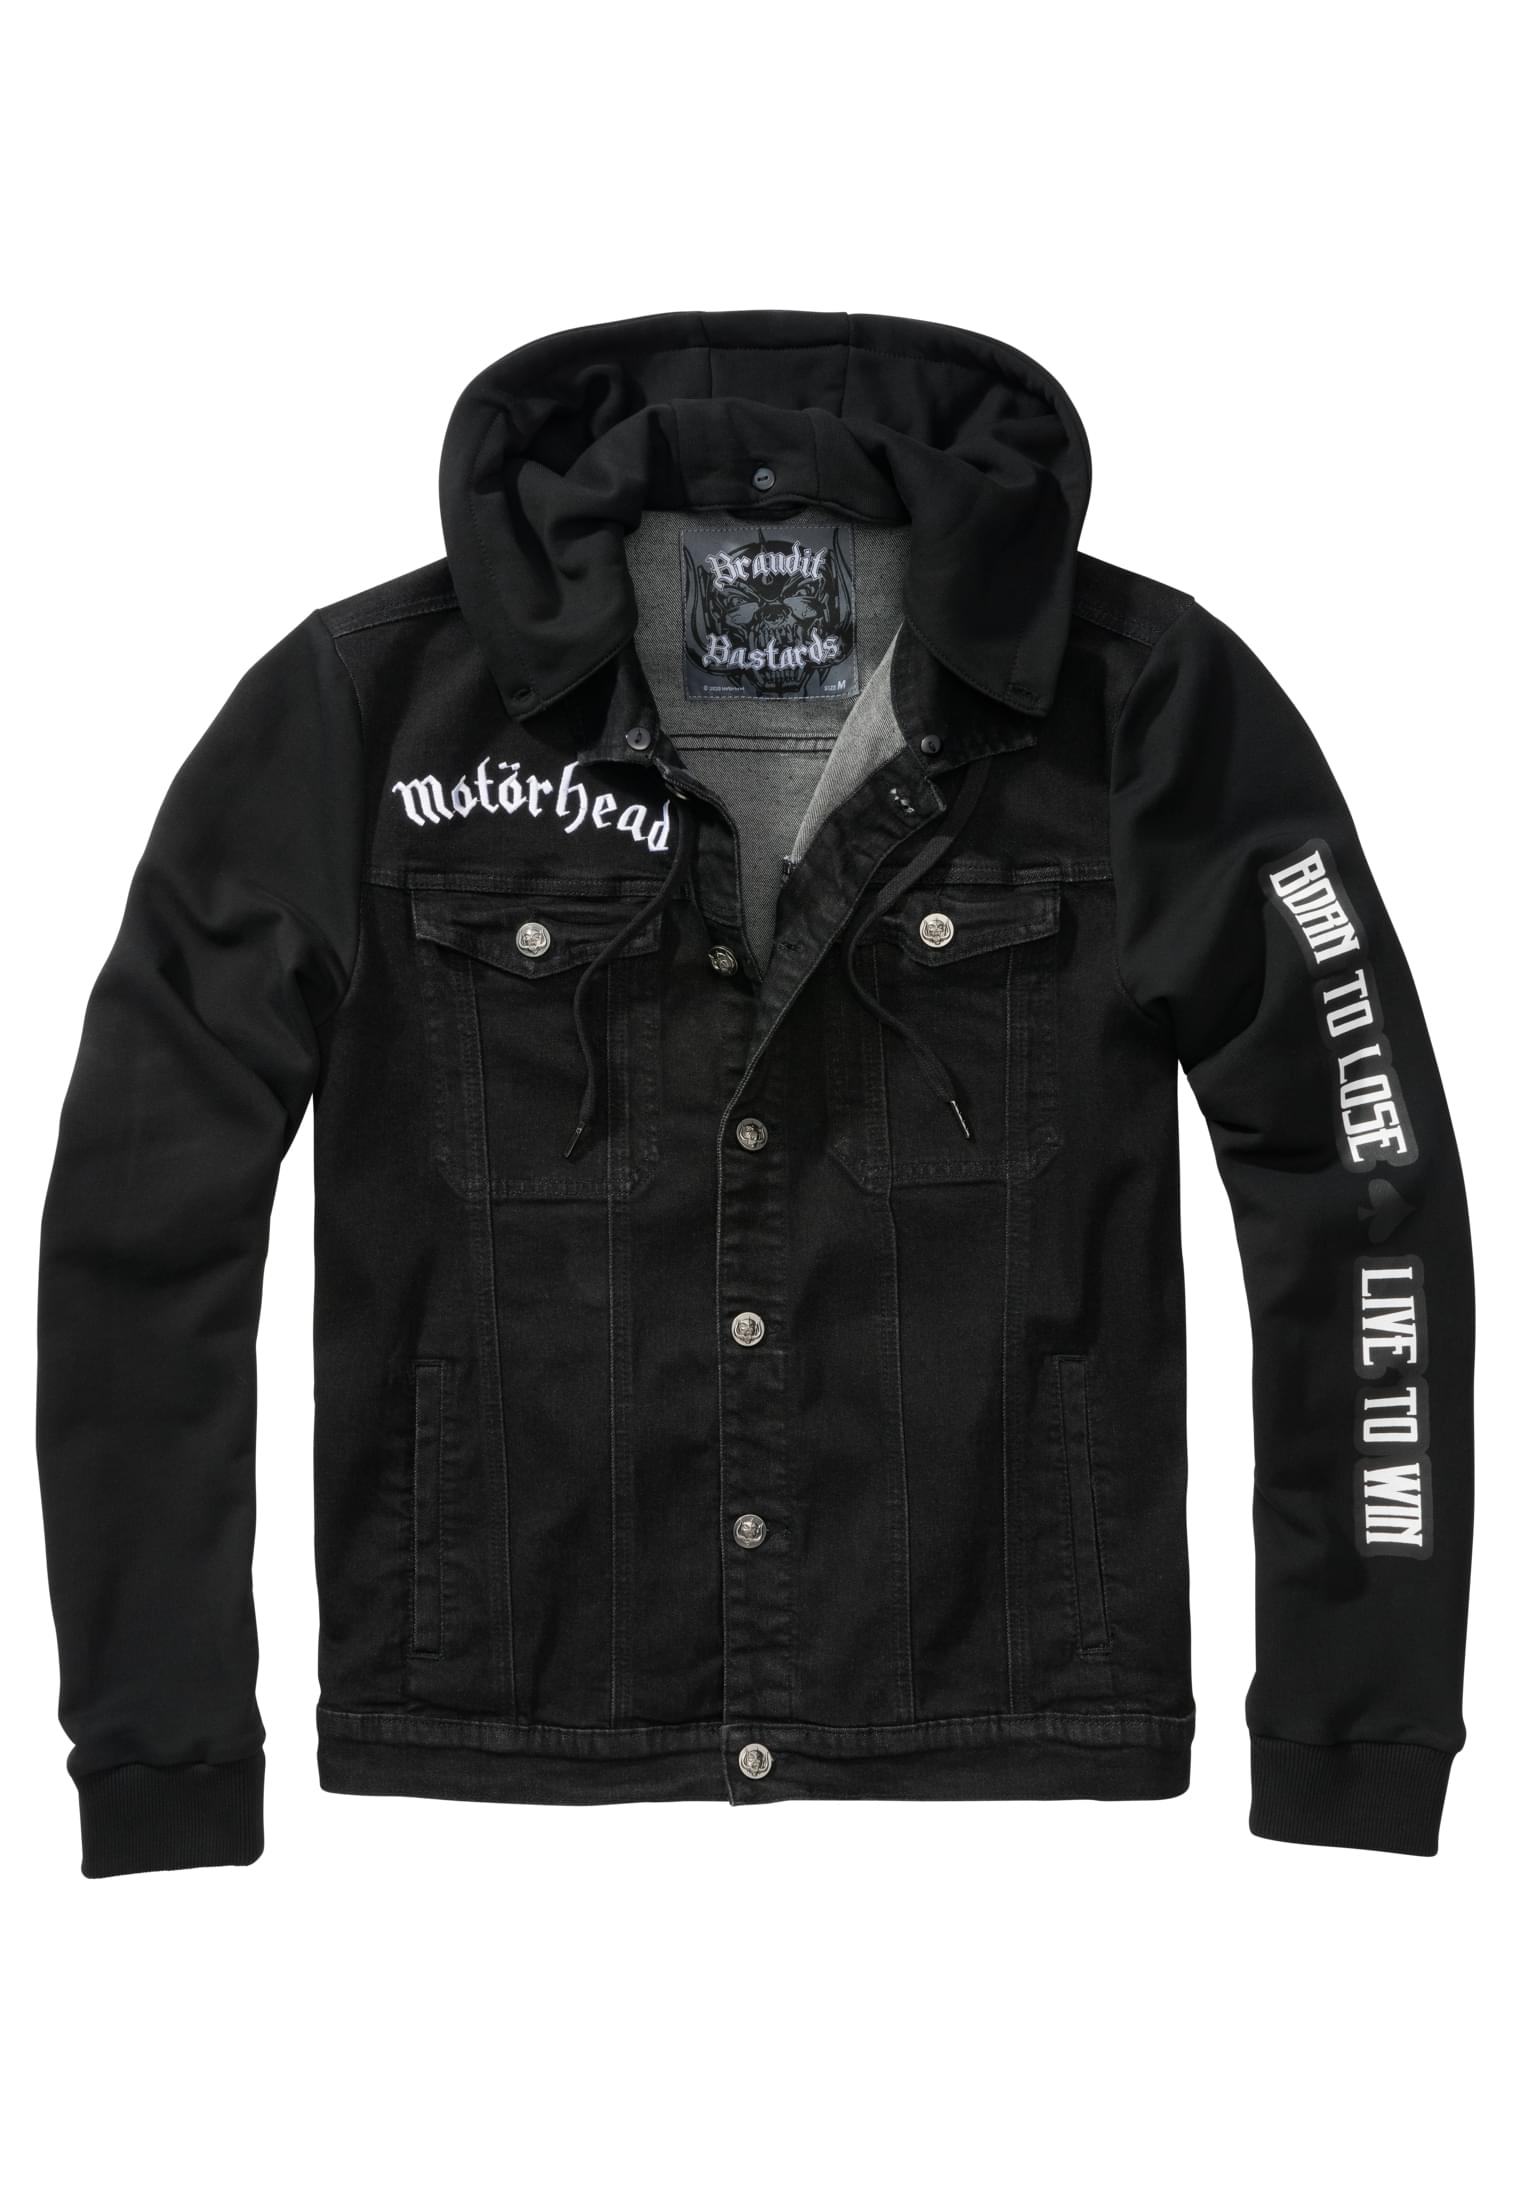 Motörhead Cradock Denim jacket black/black